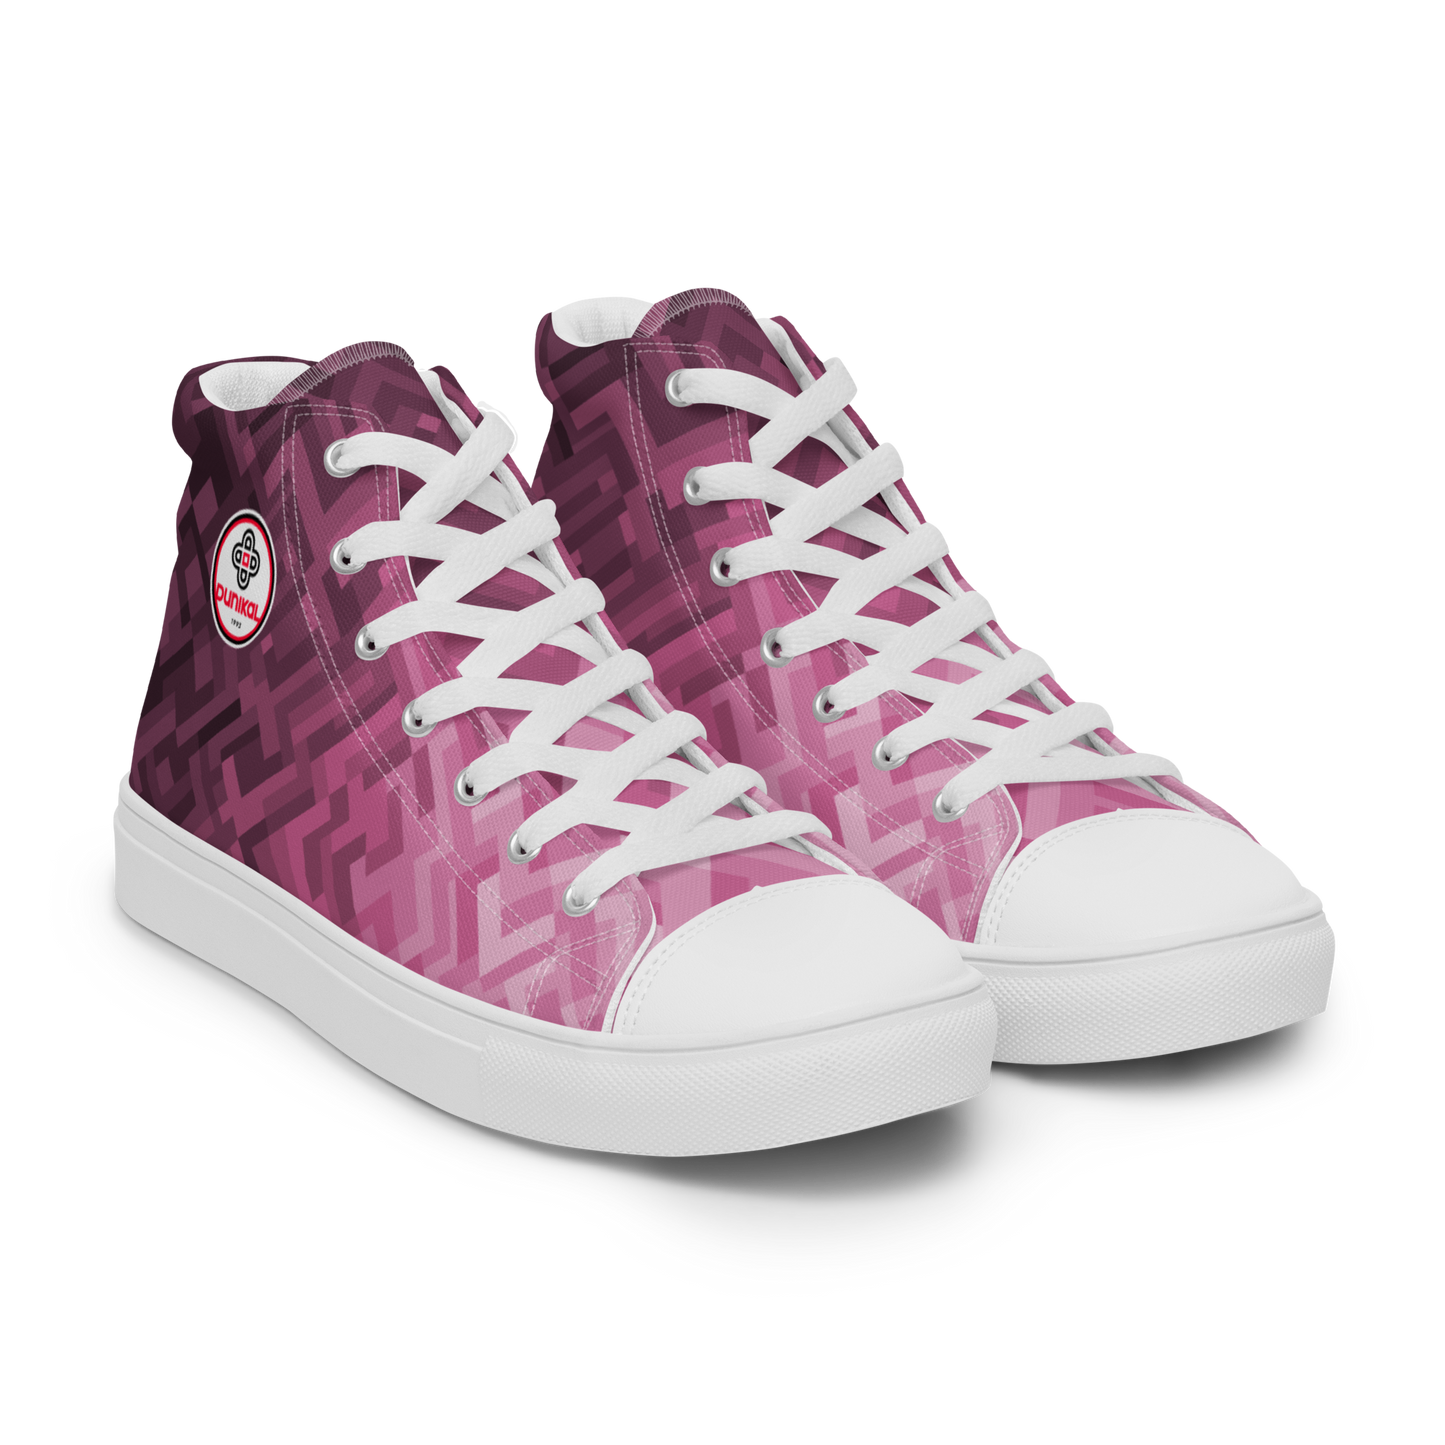 Men's Canvas Sneakers ❯ Polygonal Gradient ❯ Orchid Pink